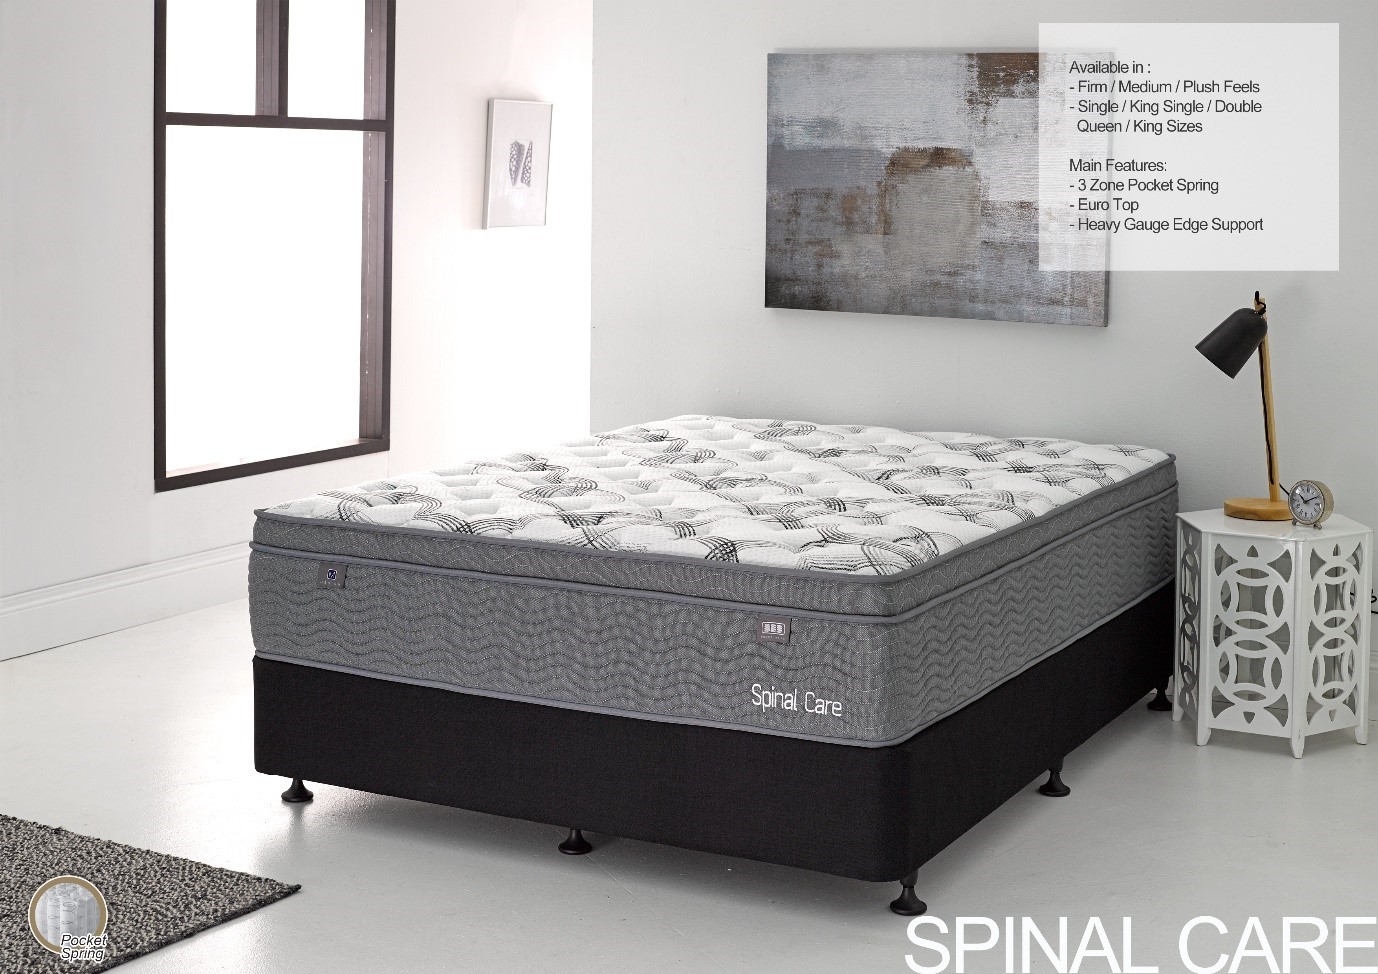 spinal care mattress price